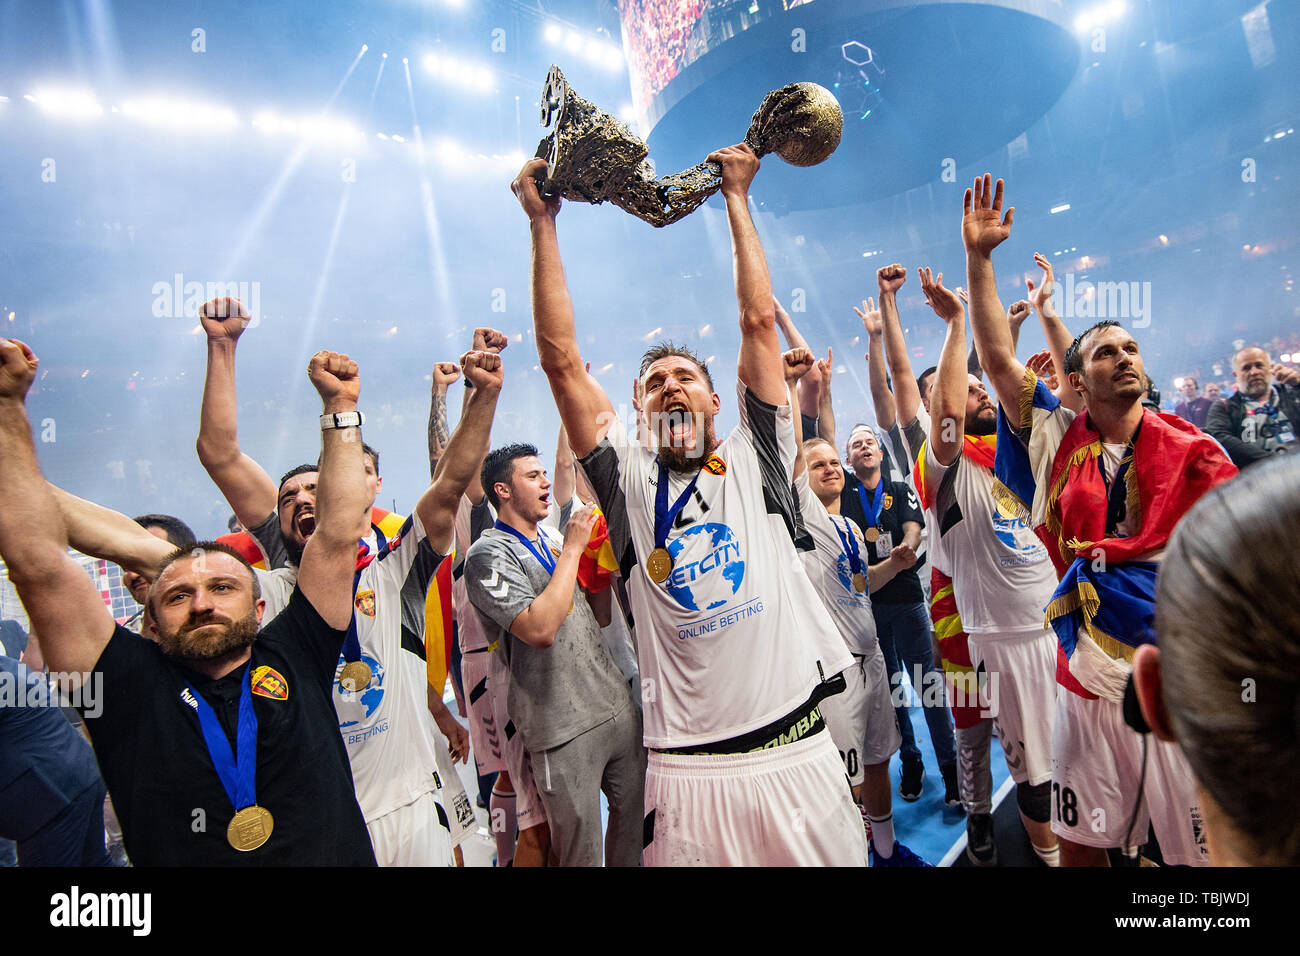 Cologne, Germany. 02nd June, 2019. Handball: Champions League, Vardar  Skopje - Telekom Veszprem, Final Round, Final Four, Final. The Vardar team  celebrate with the cup that Glab Kalarash holds up. Vardar Skopje